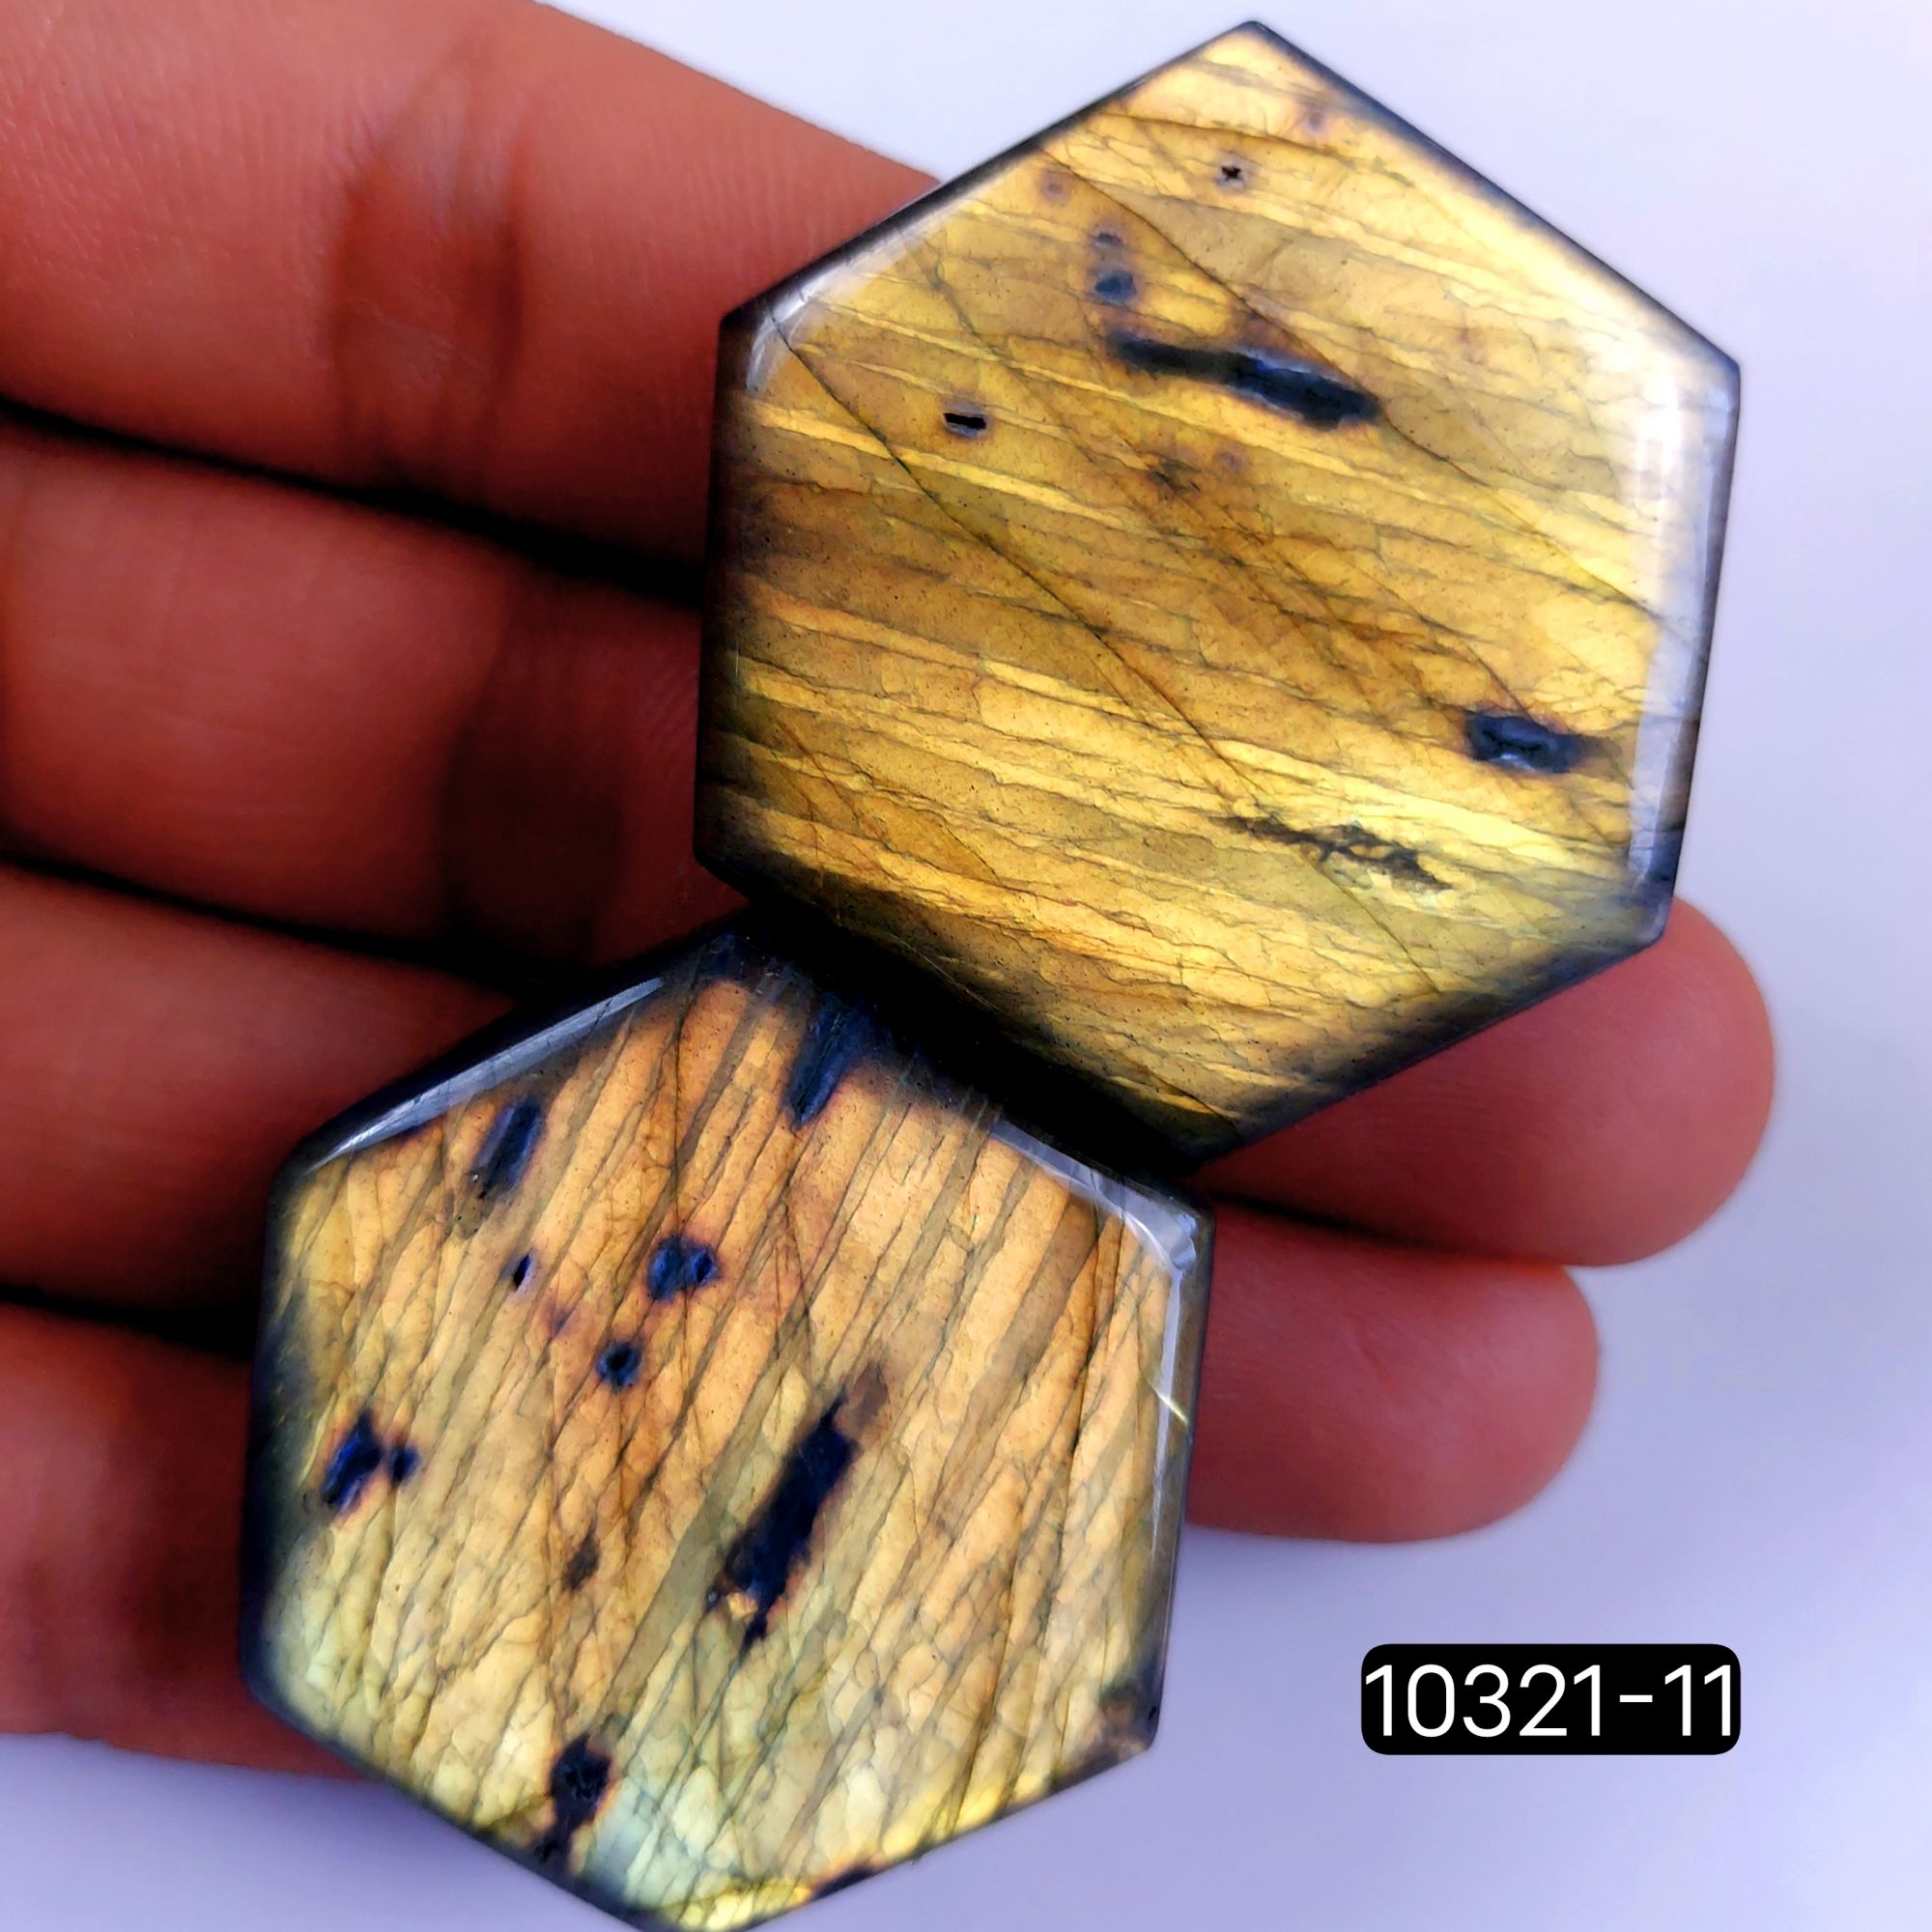 225Cts Natural Labradorite Cabochon Pair Polished Loose Gemstone Flat Back Multi Jewelry Making Crystal  34x34mm #10321-11